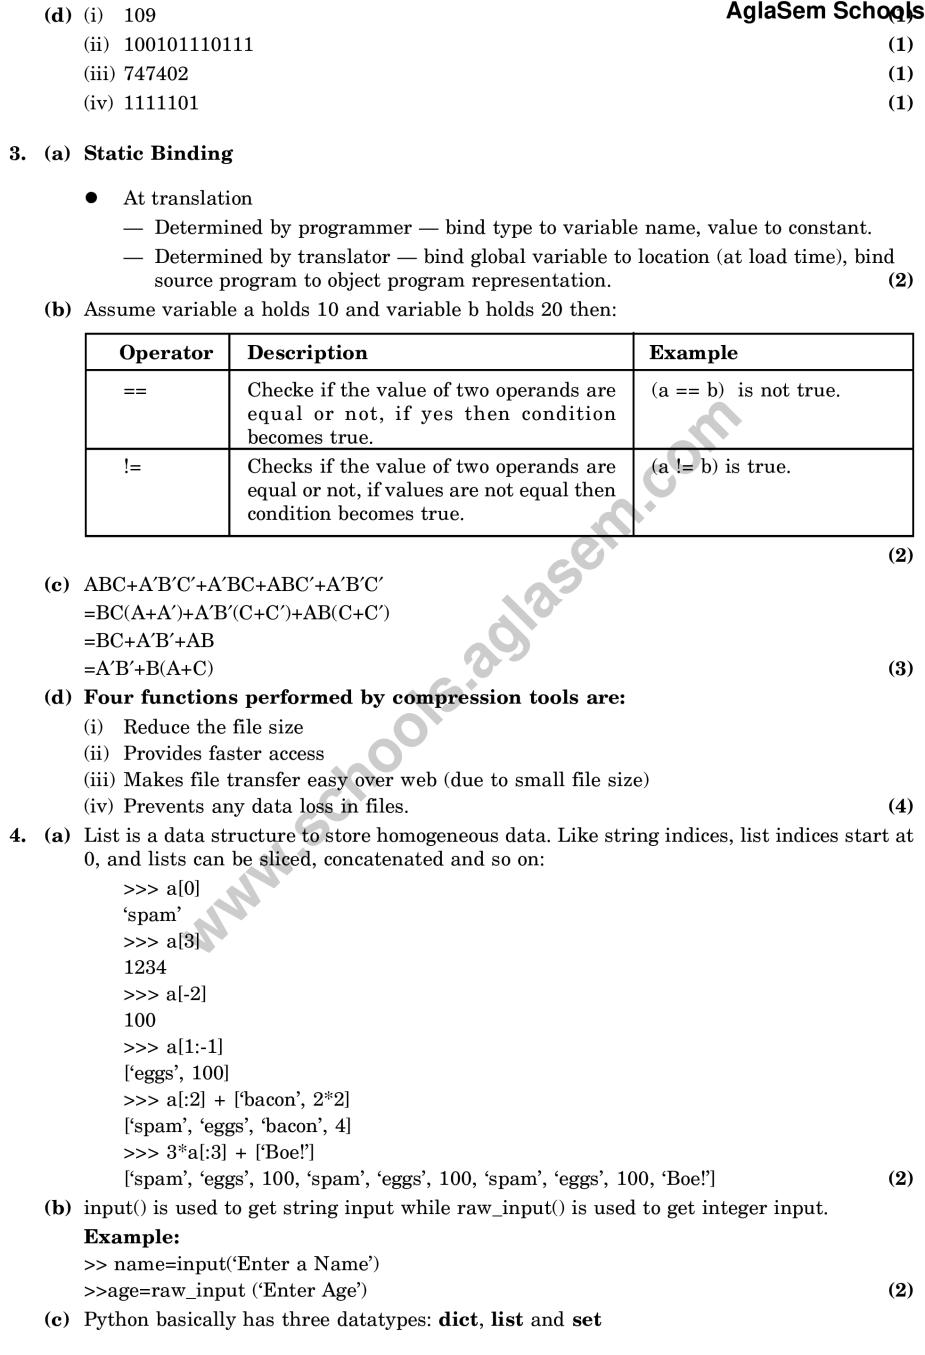 problem solving class 11 computer science pdf